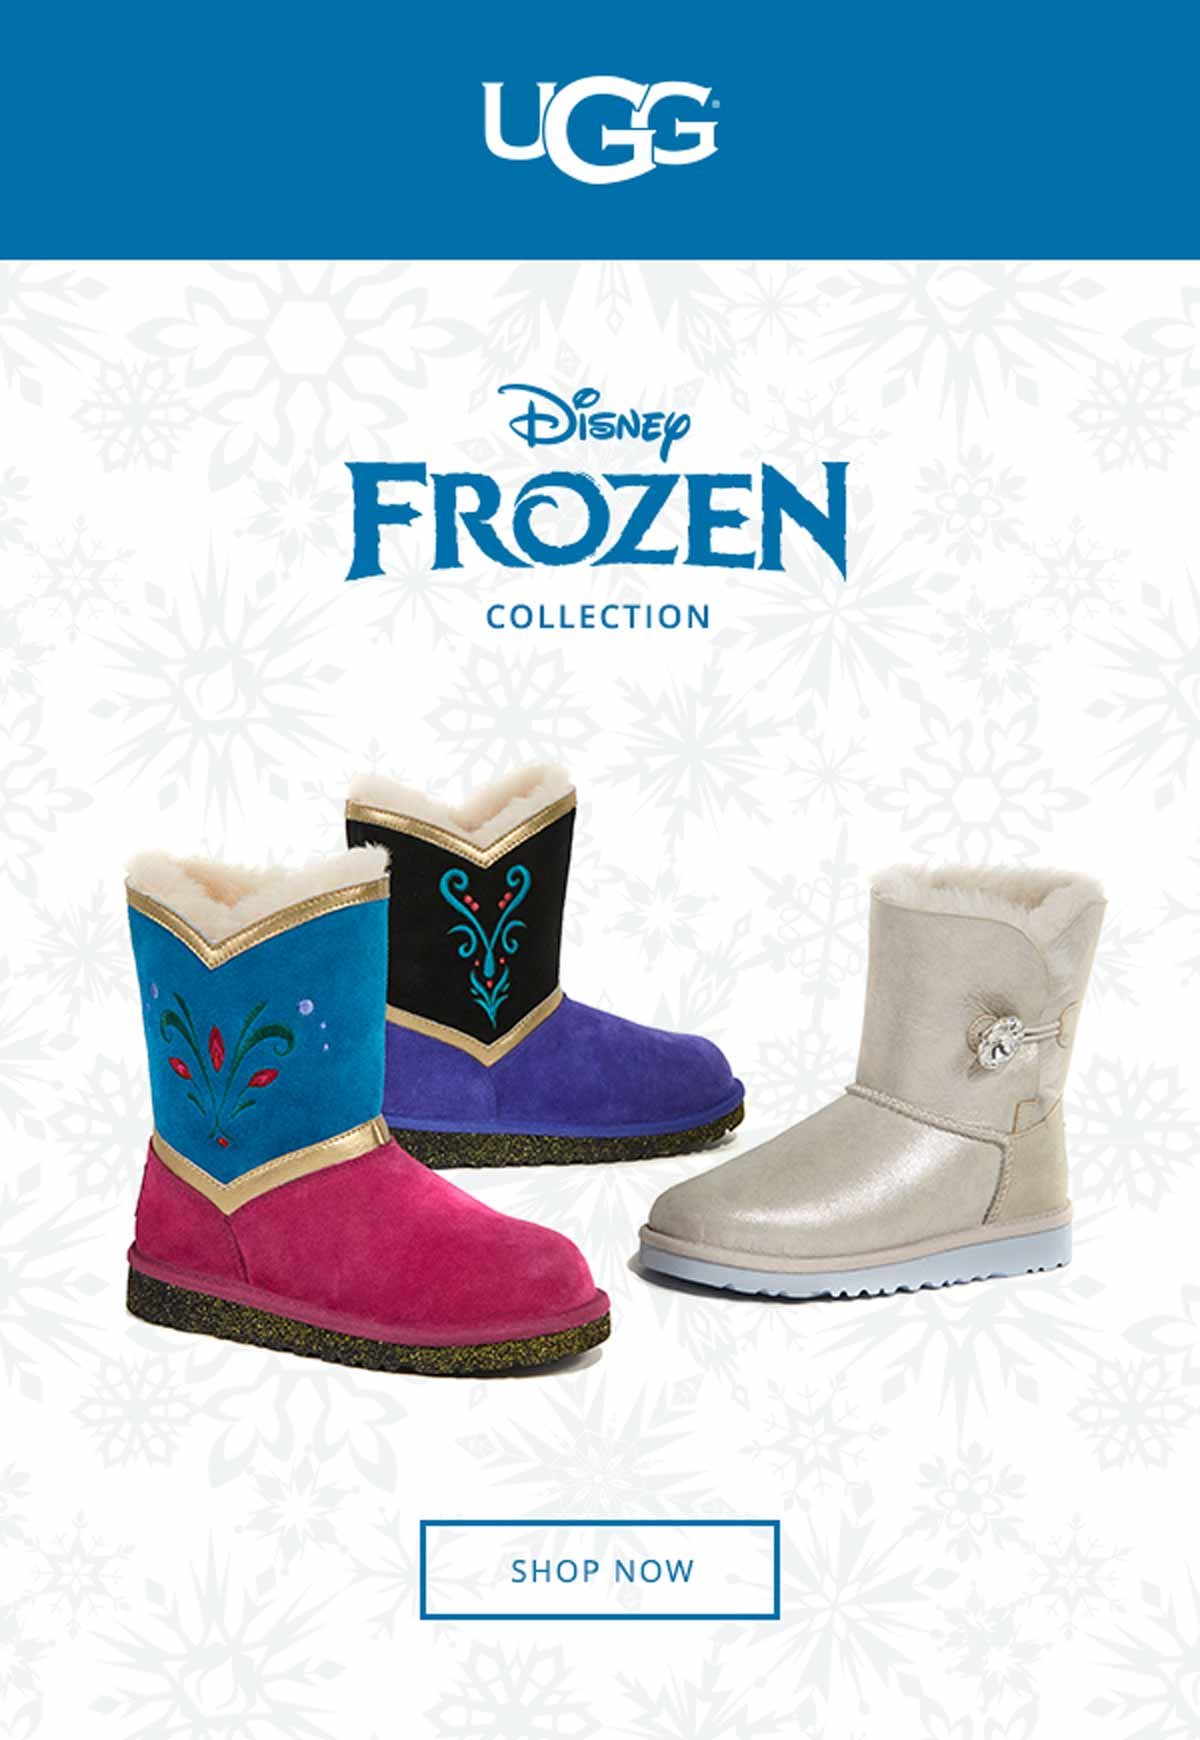 UGG Australia: Disney Frozen Collection 